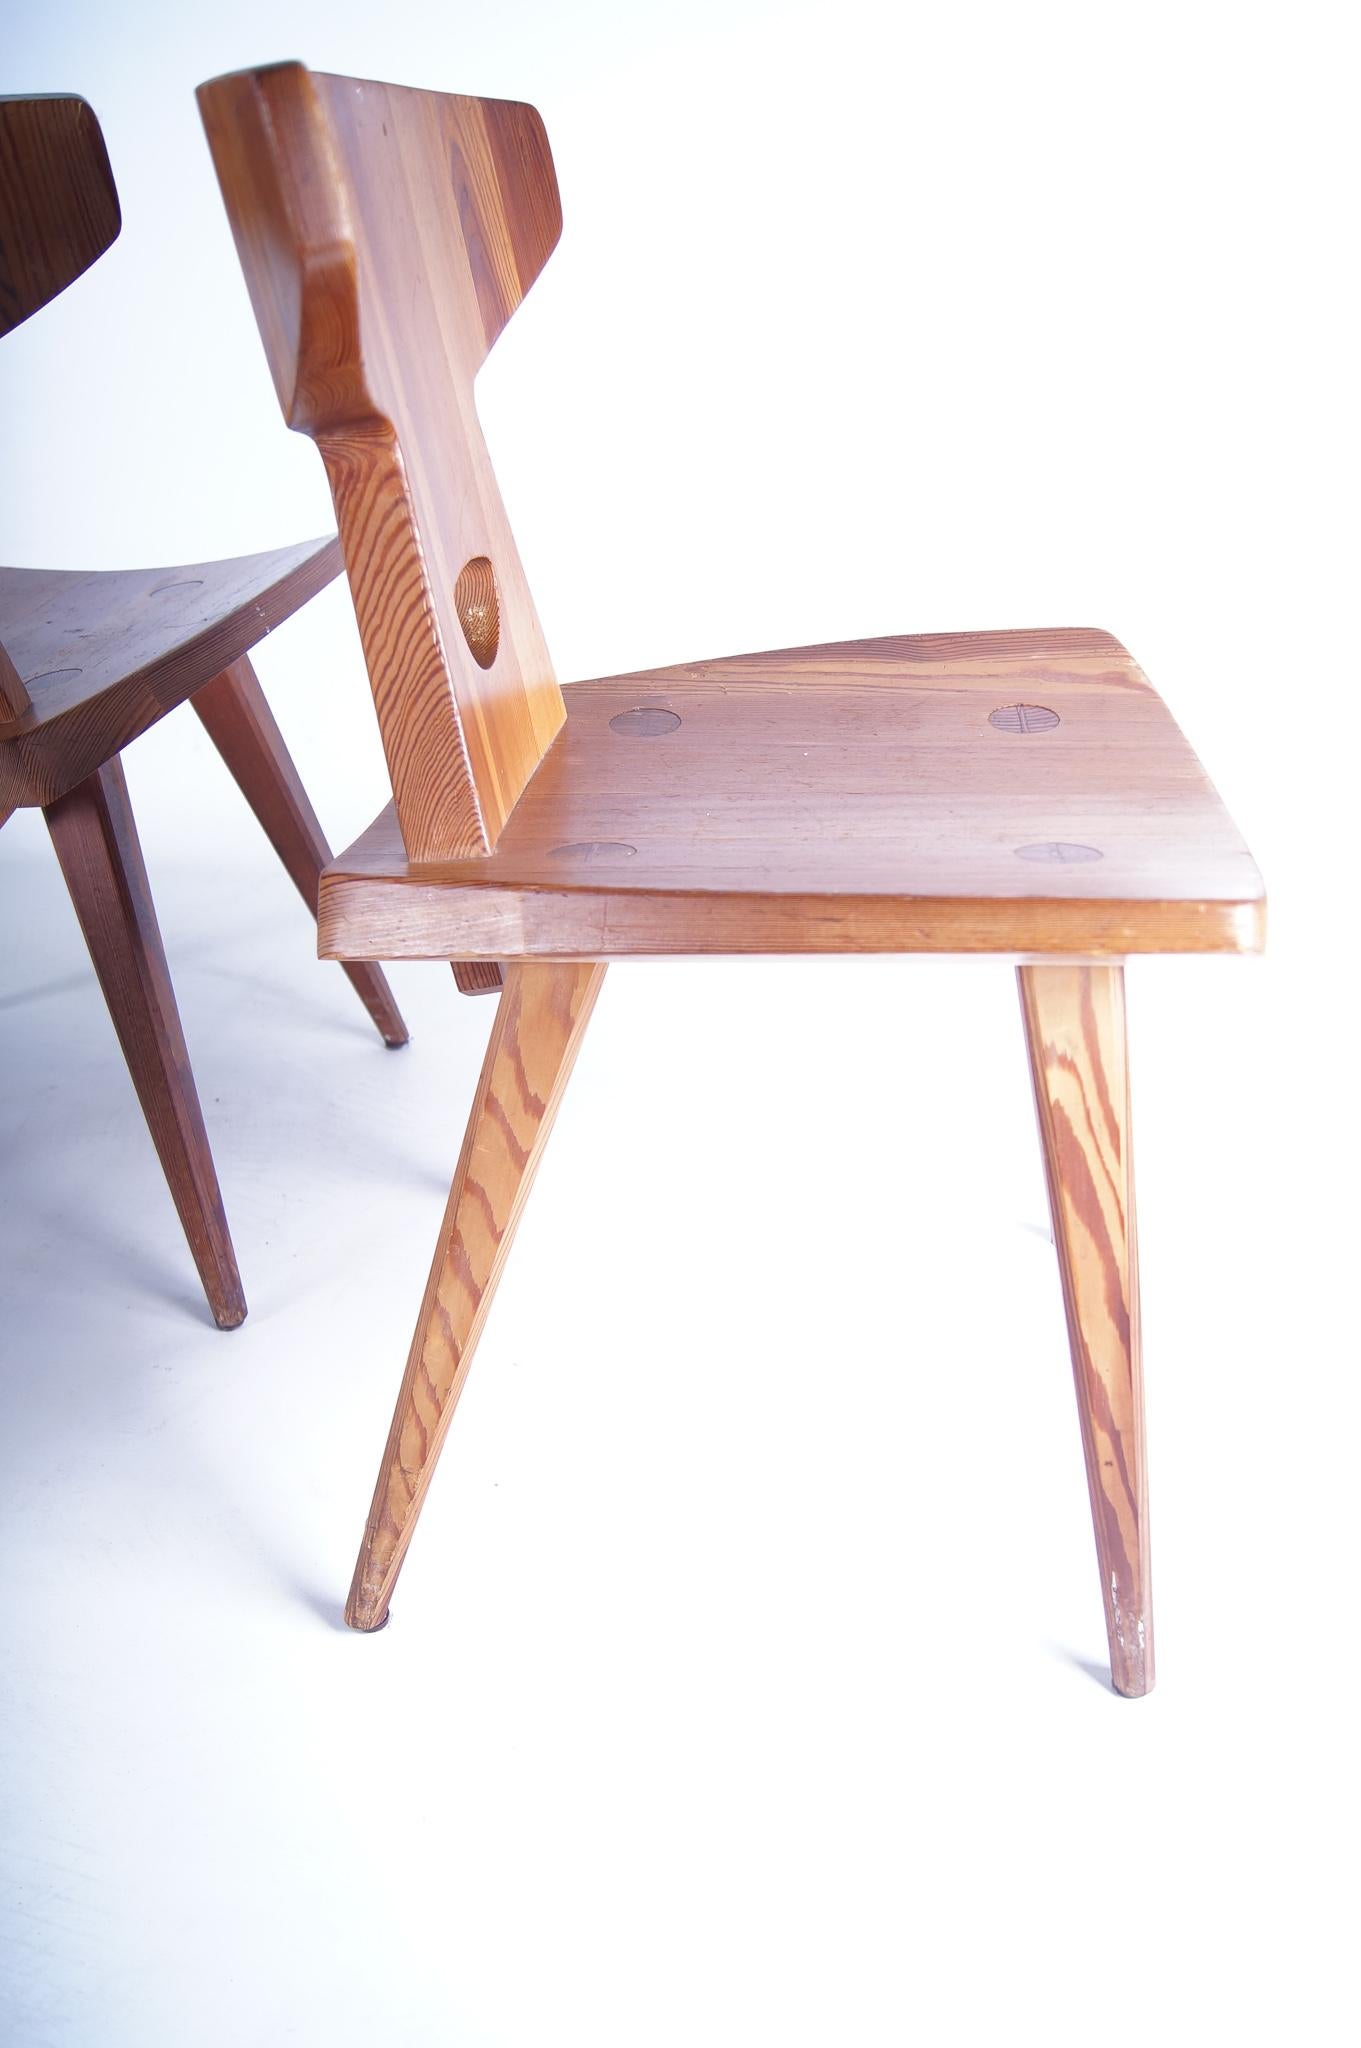 Fir 1960s Jacob Kielland-Brandt Dining Room Chairs for I. Christiansen, Set of 4